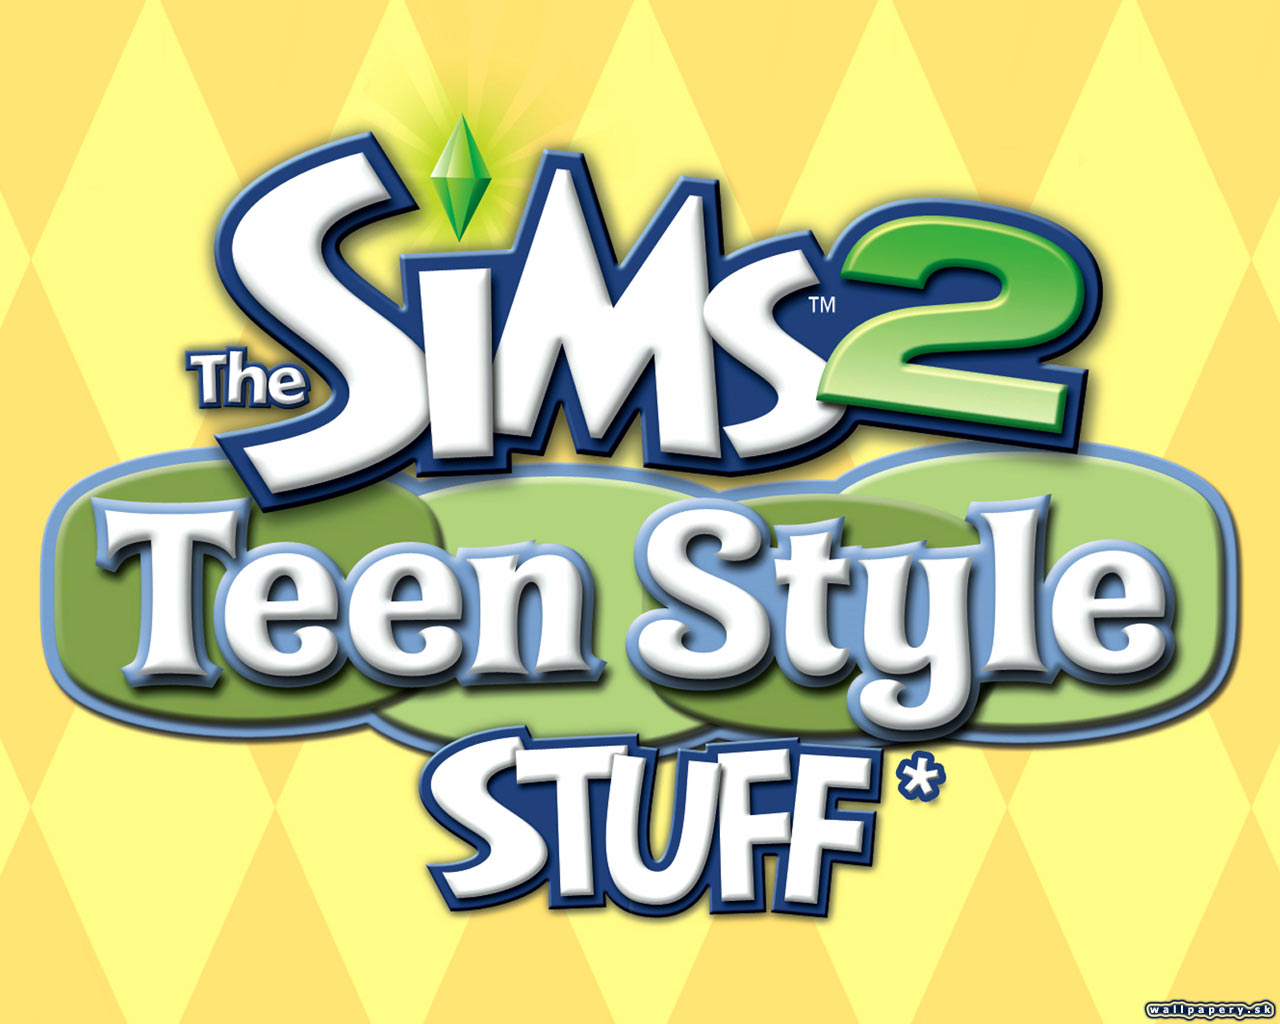 The Sims 2: Teen Style Stuff - wallpaper 2